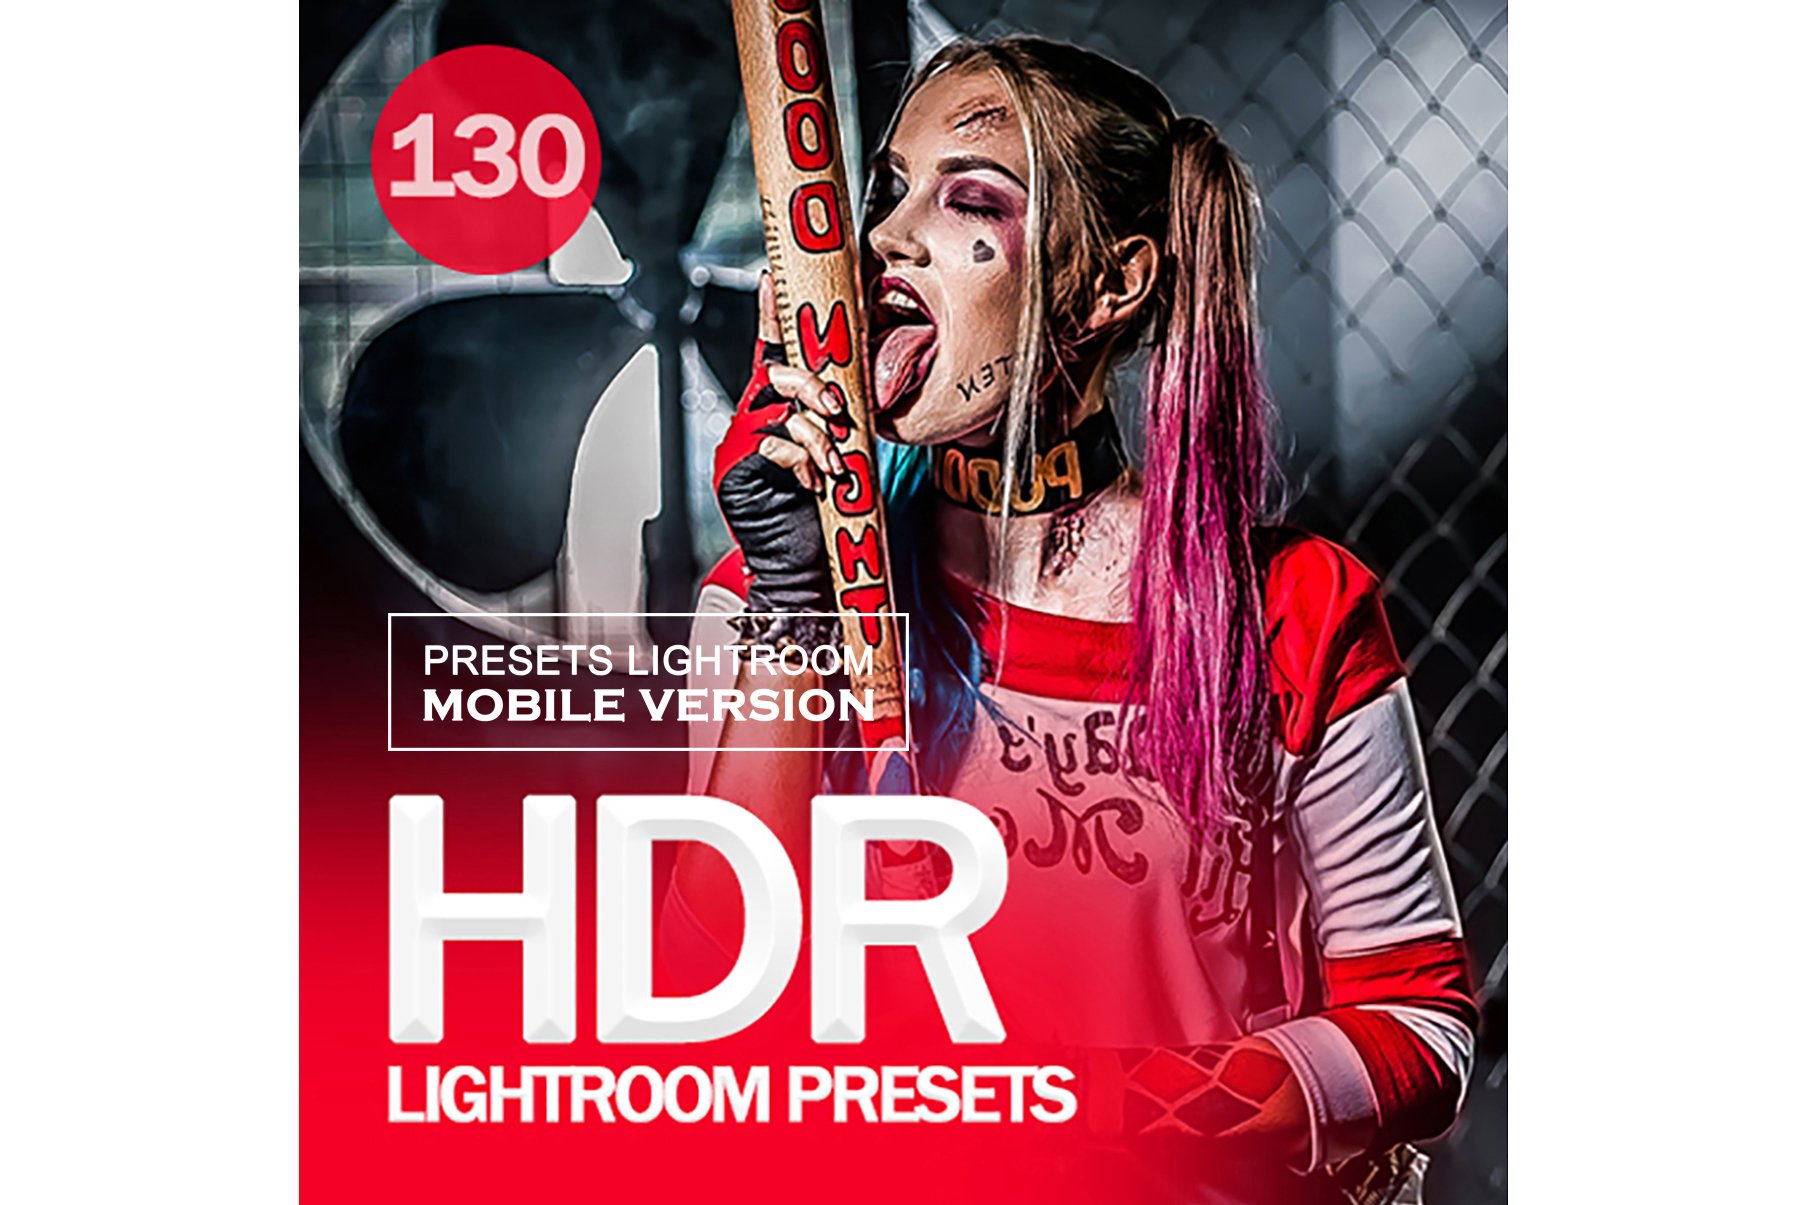 HDR Lightroom Mobile Presetscover image.